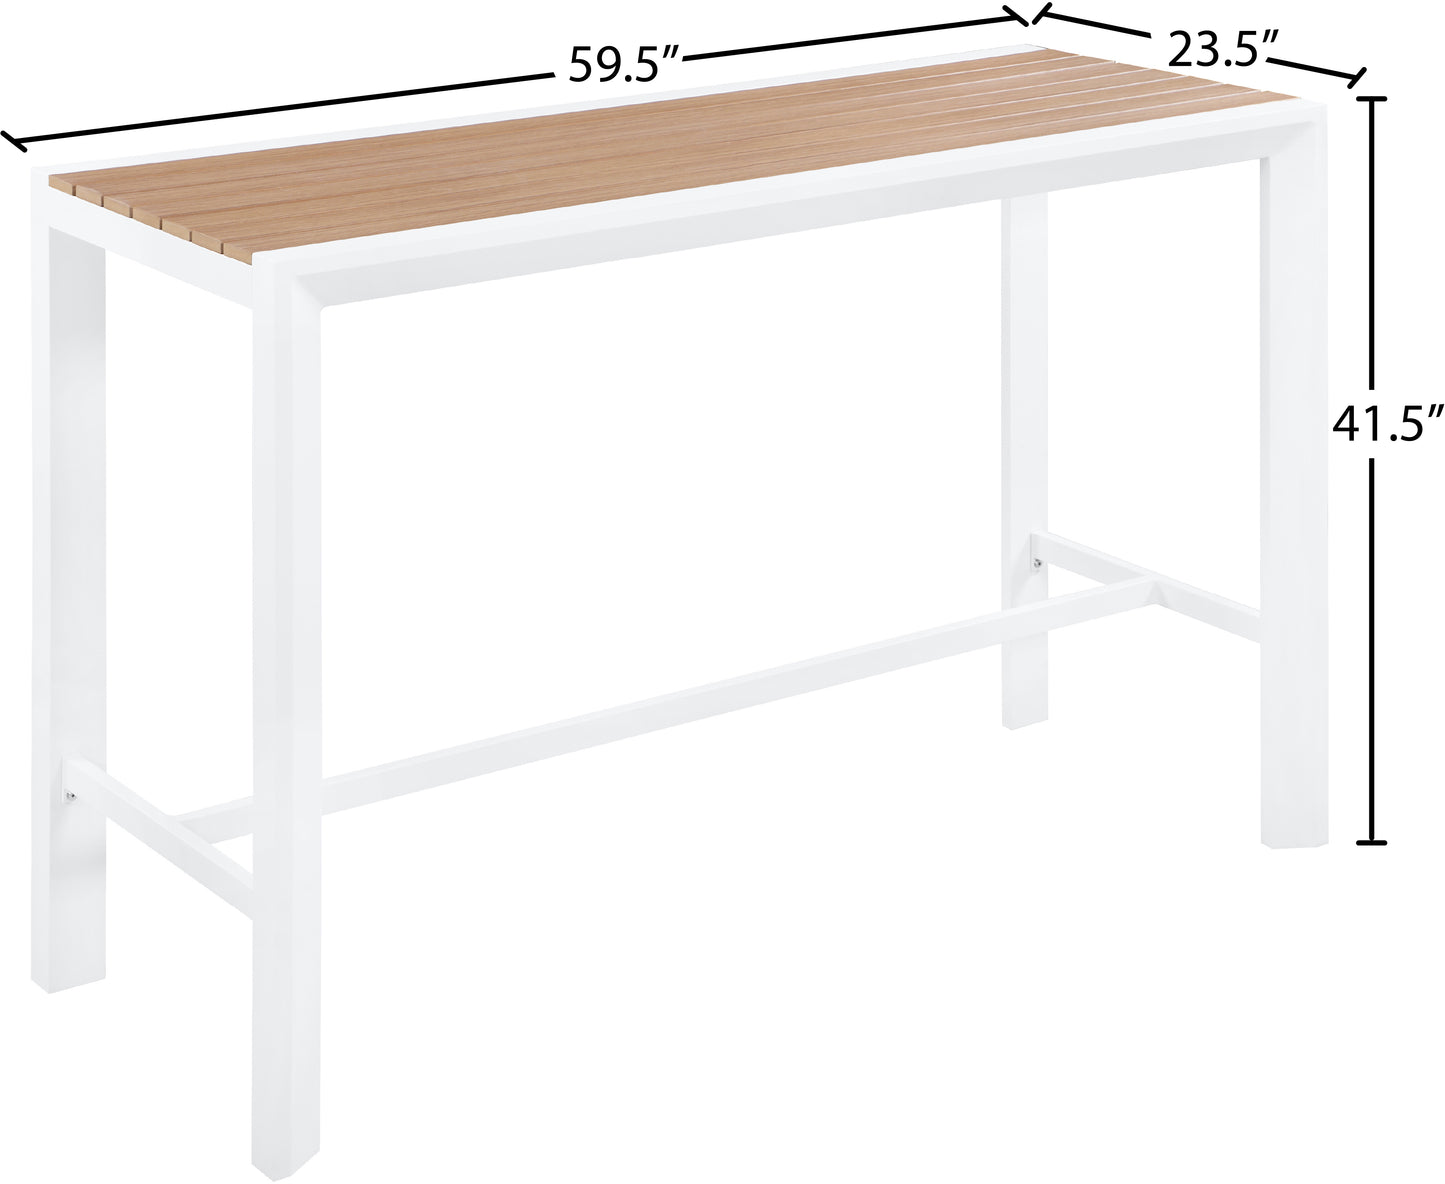 alyssa brown wood look accent paneling outdoor patio aluminum rectangle bar table t